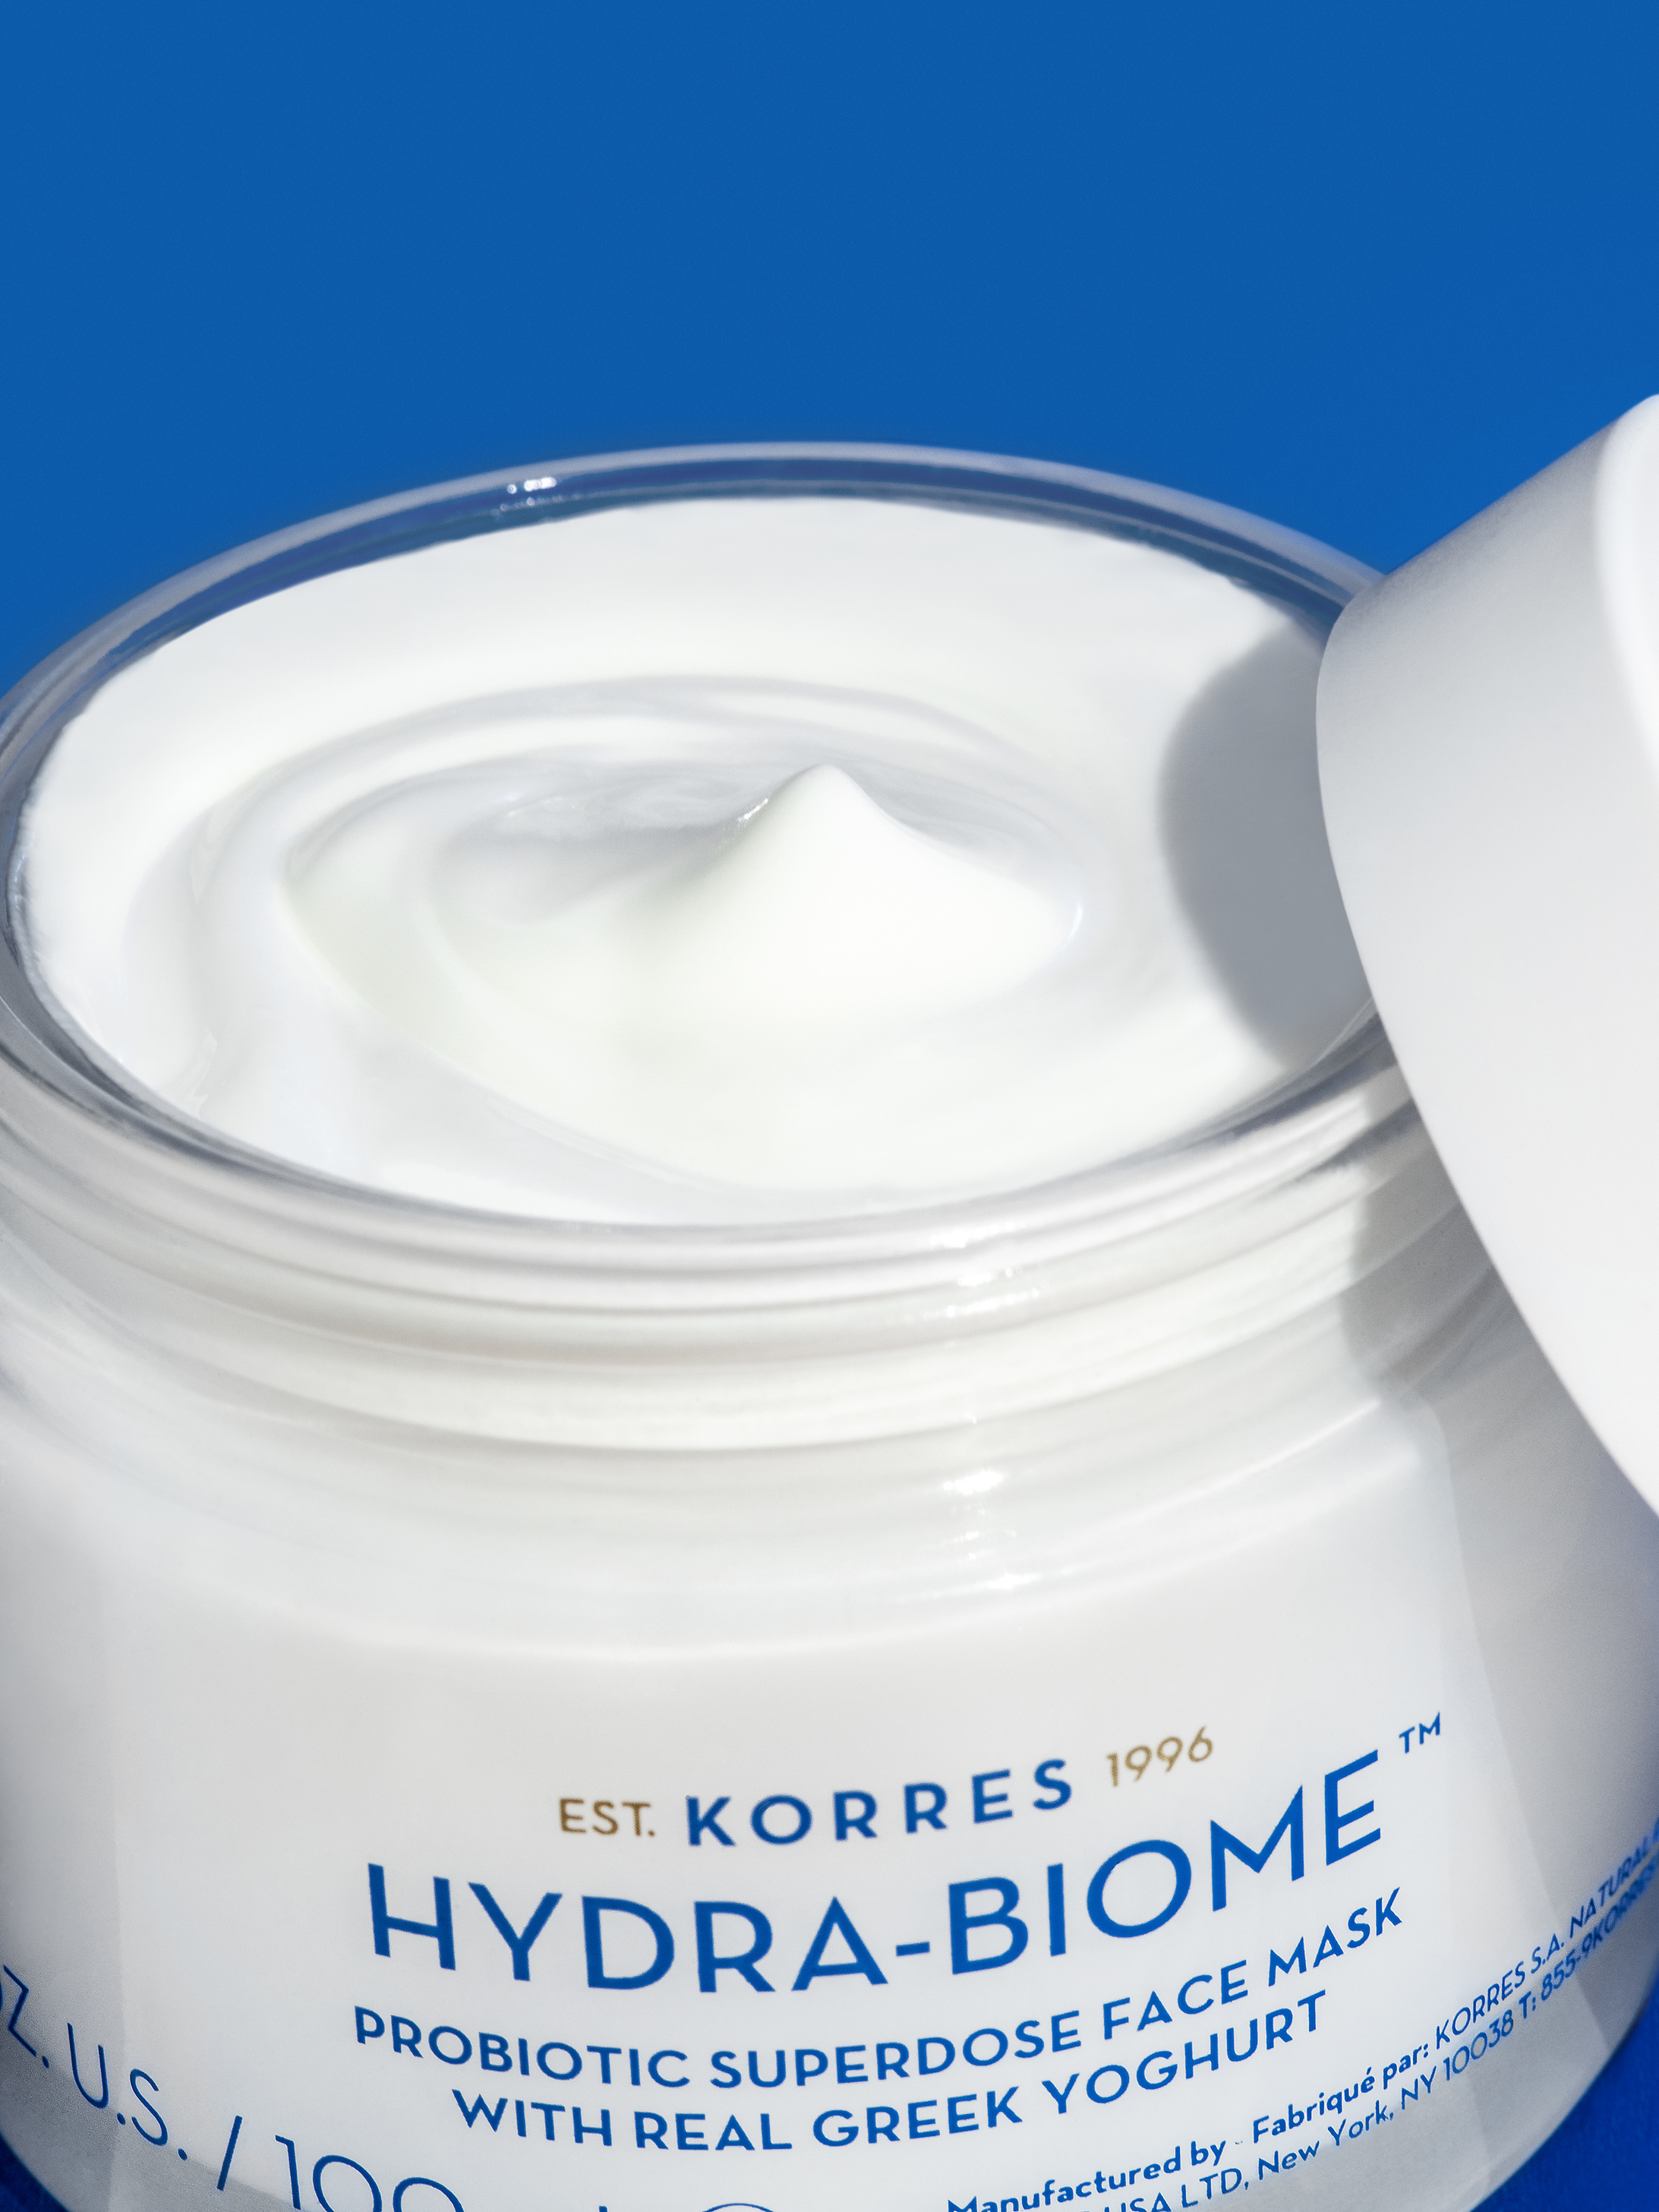 #KORRESGreekYoghurt – Hydra-Biome™ probiotic superdose face mask με αληθινό ελληνικό γιαούρτι